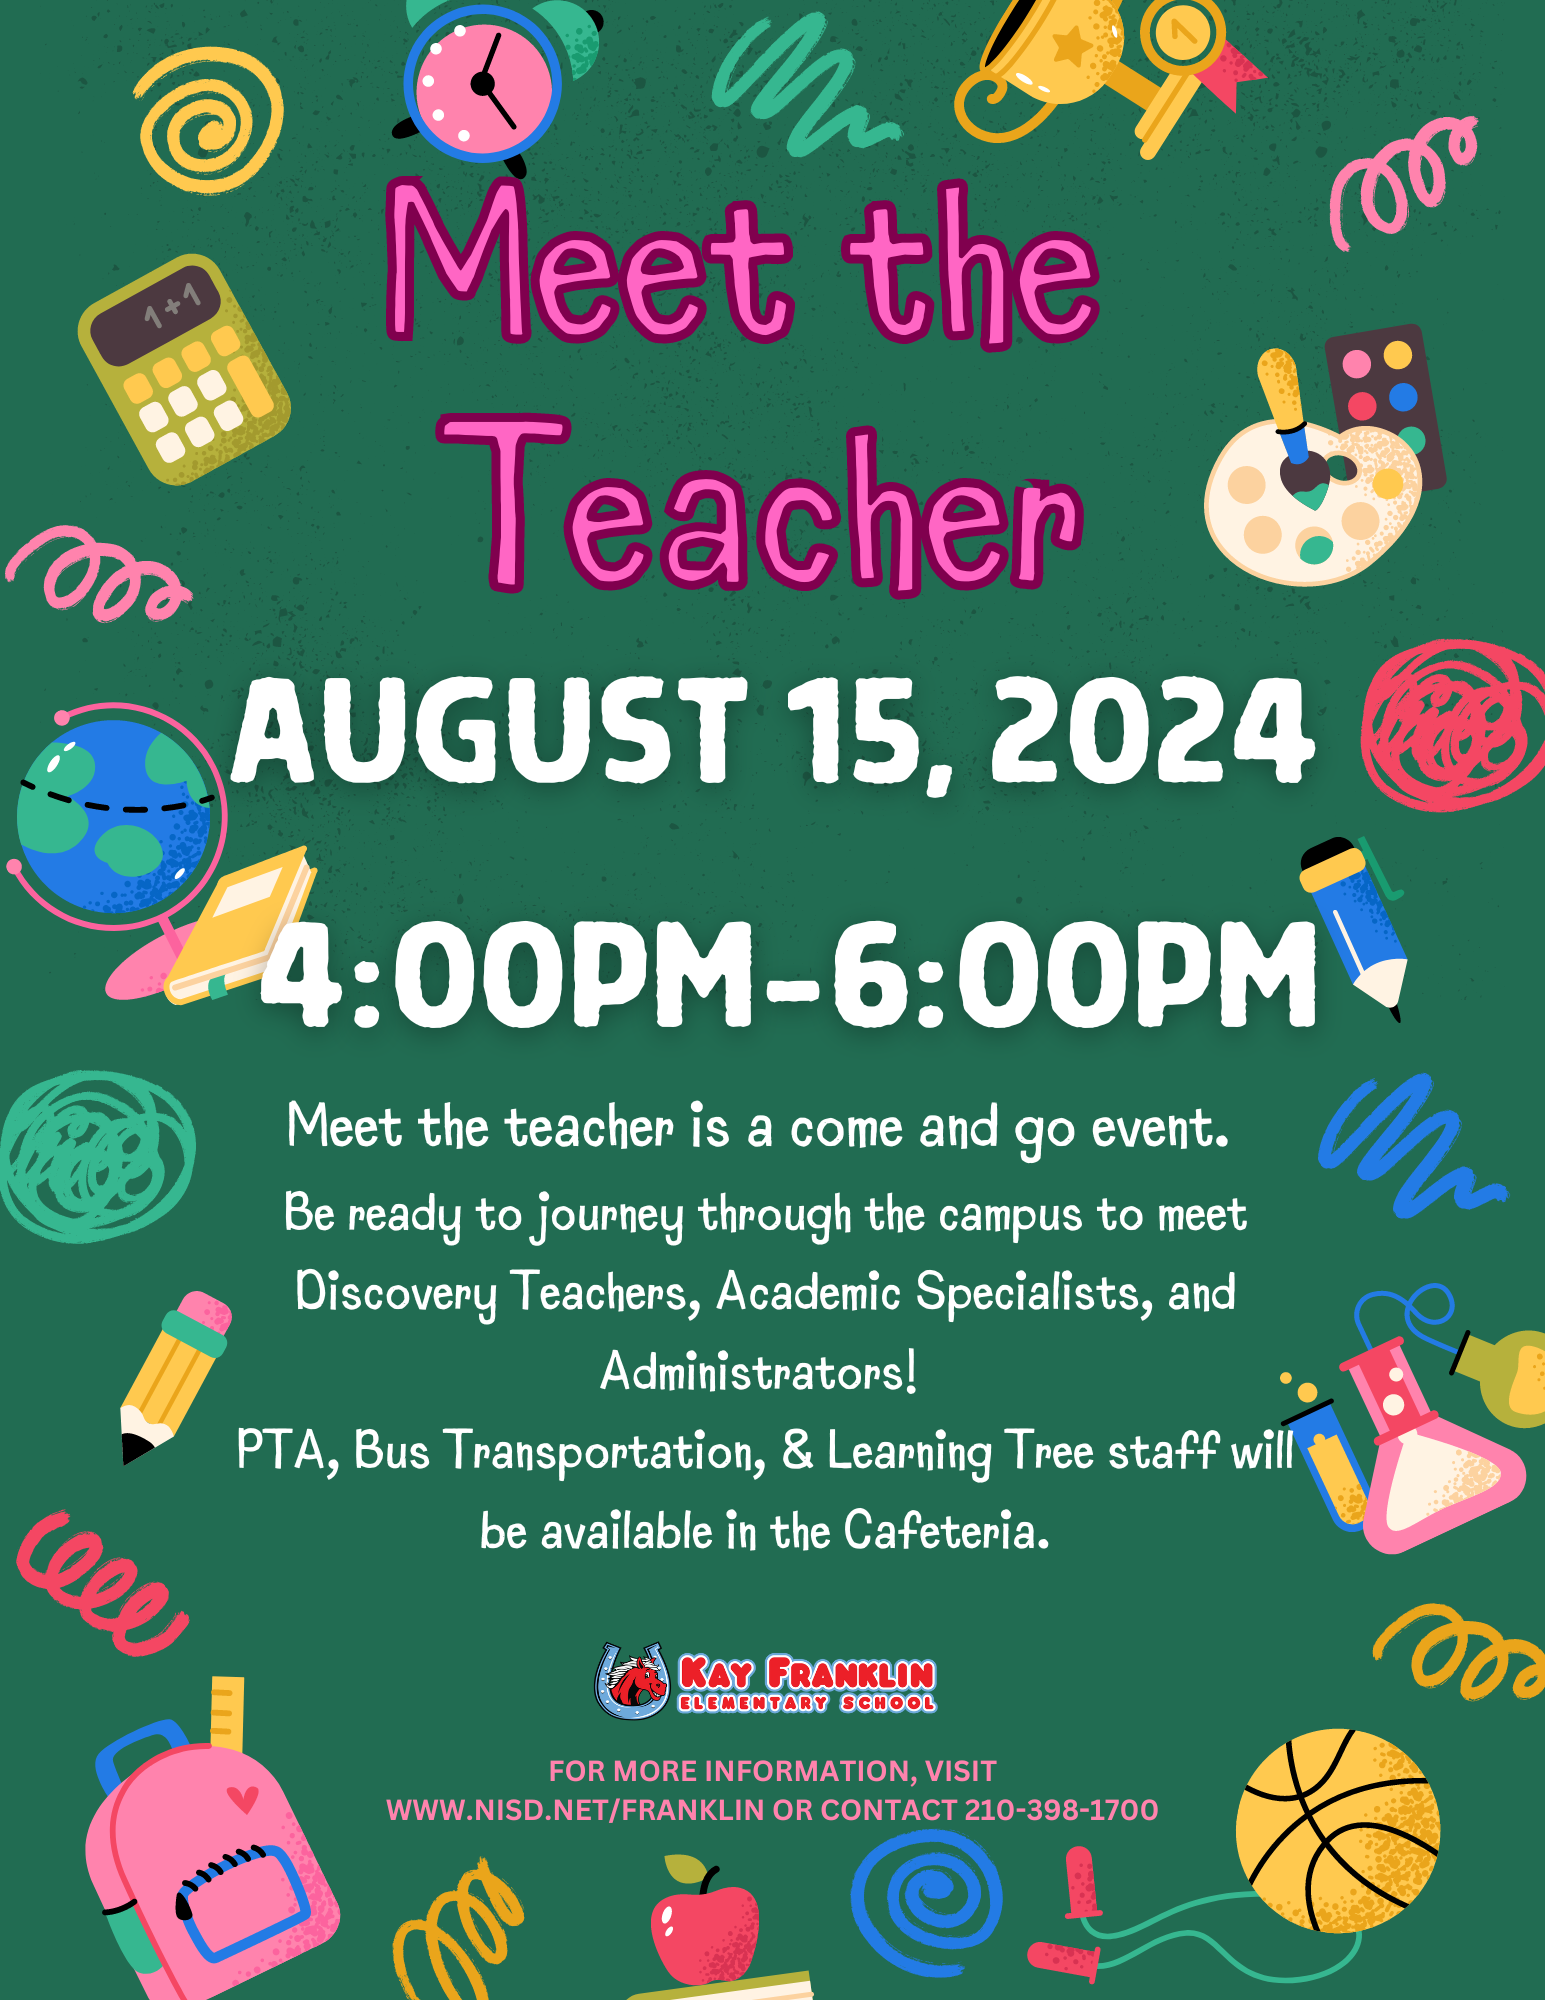 Meet the teacher Aug 15